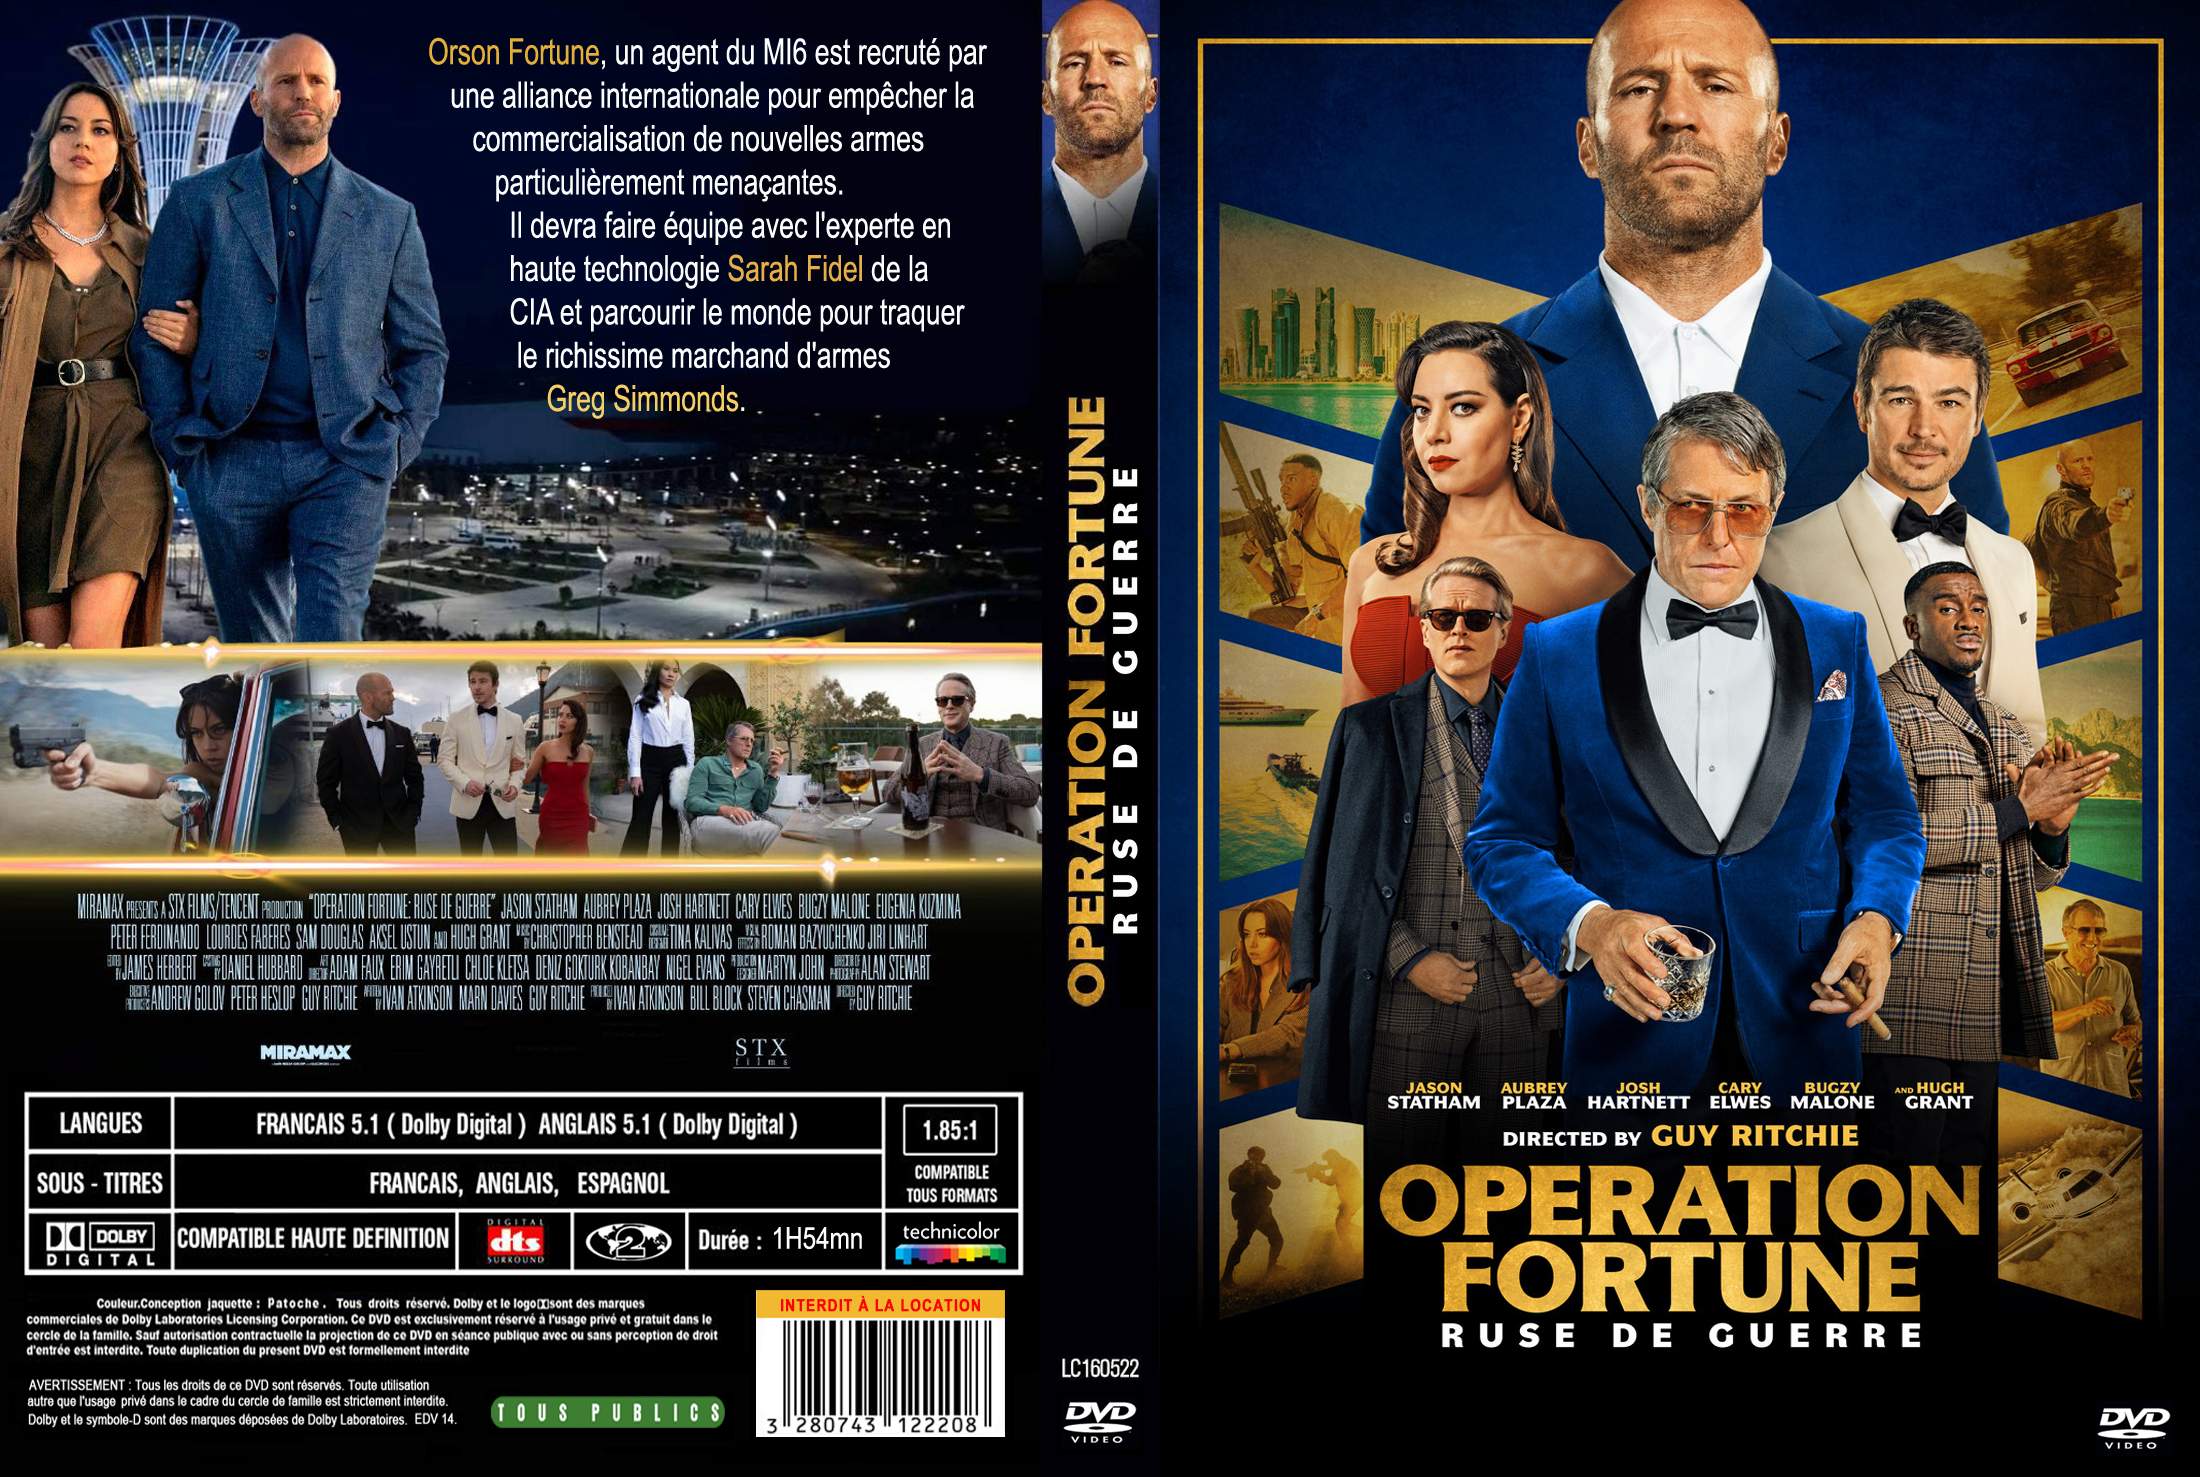 Jaquette DVD Operation Fortune: Ruse de guerre custom